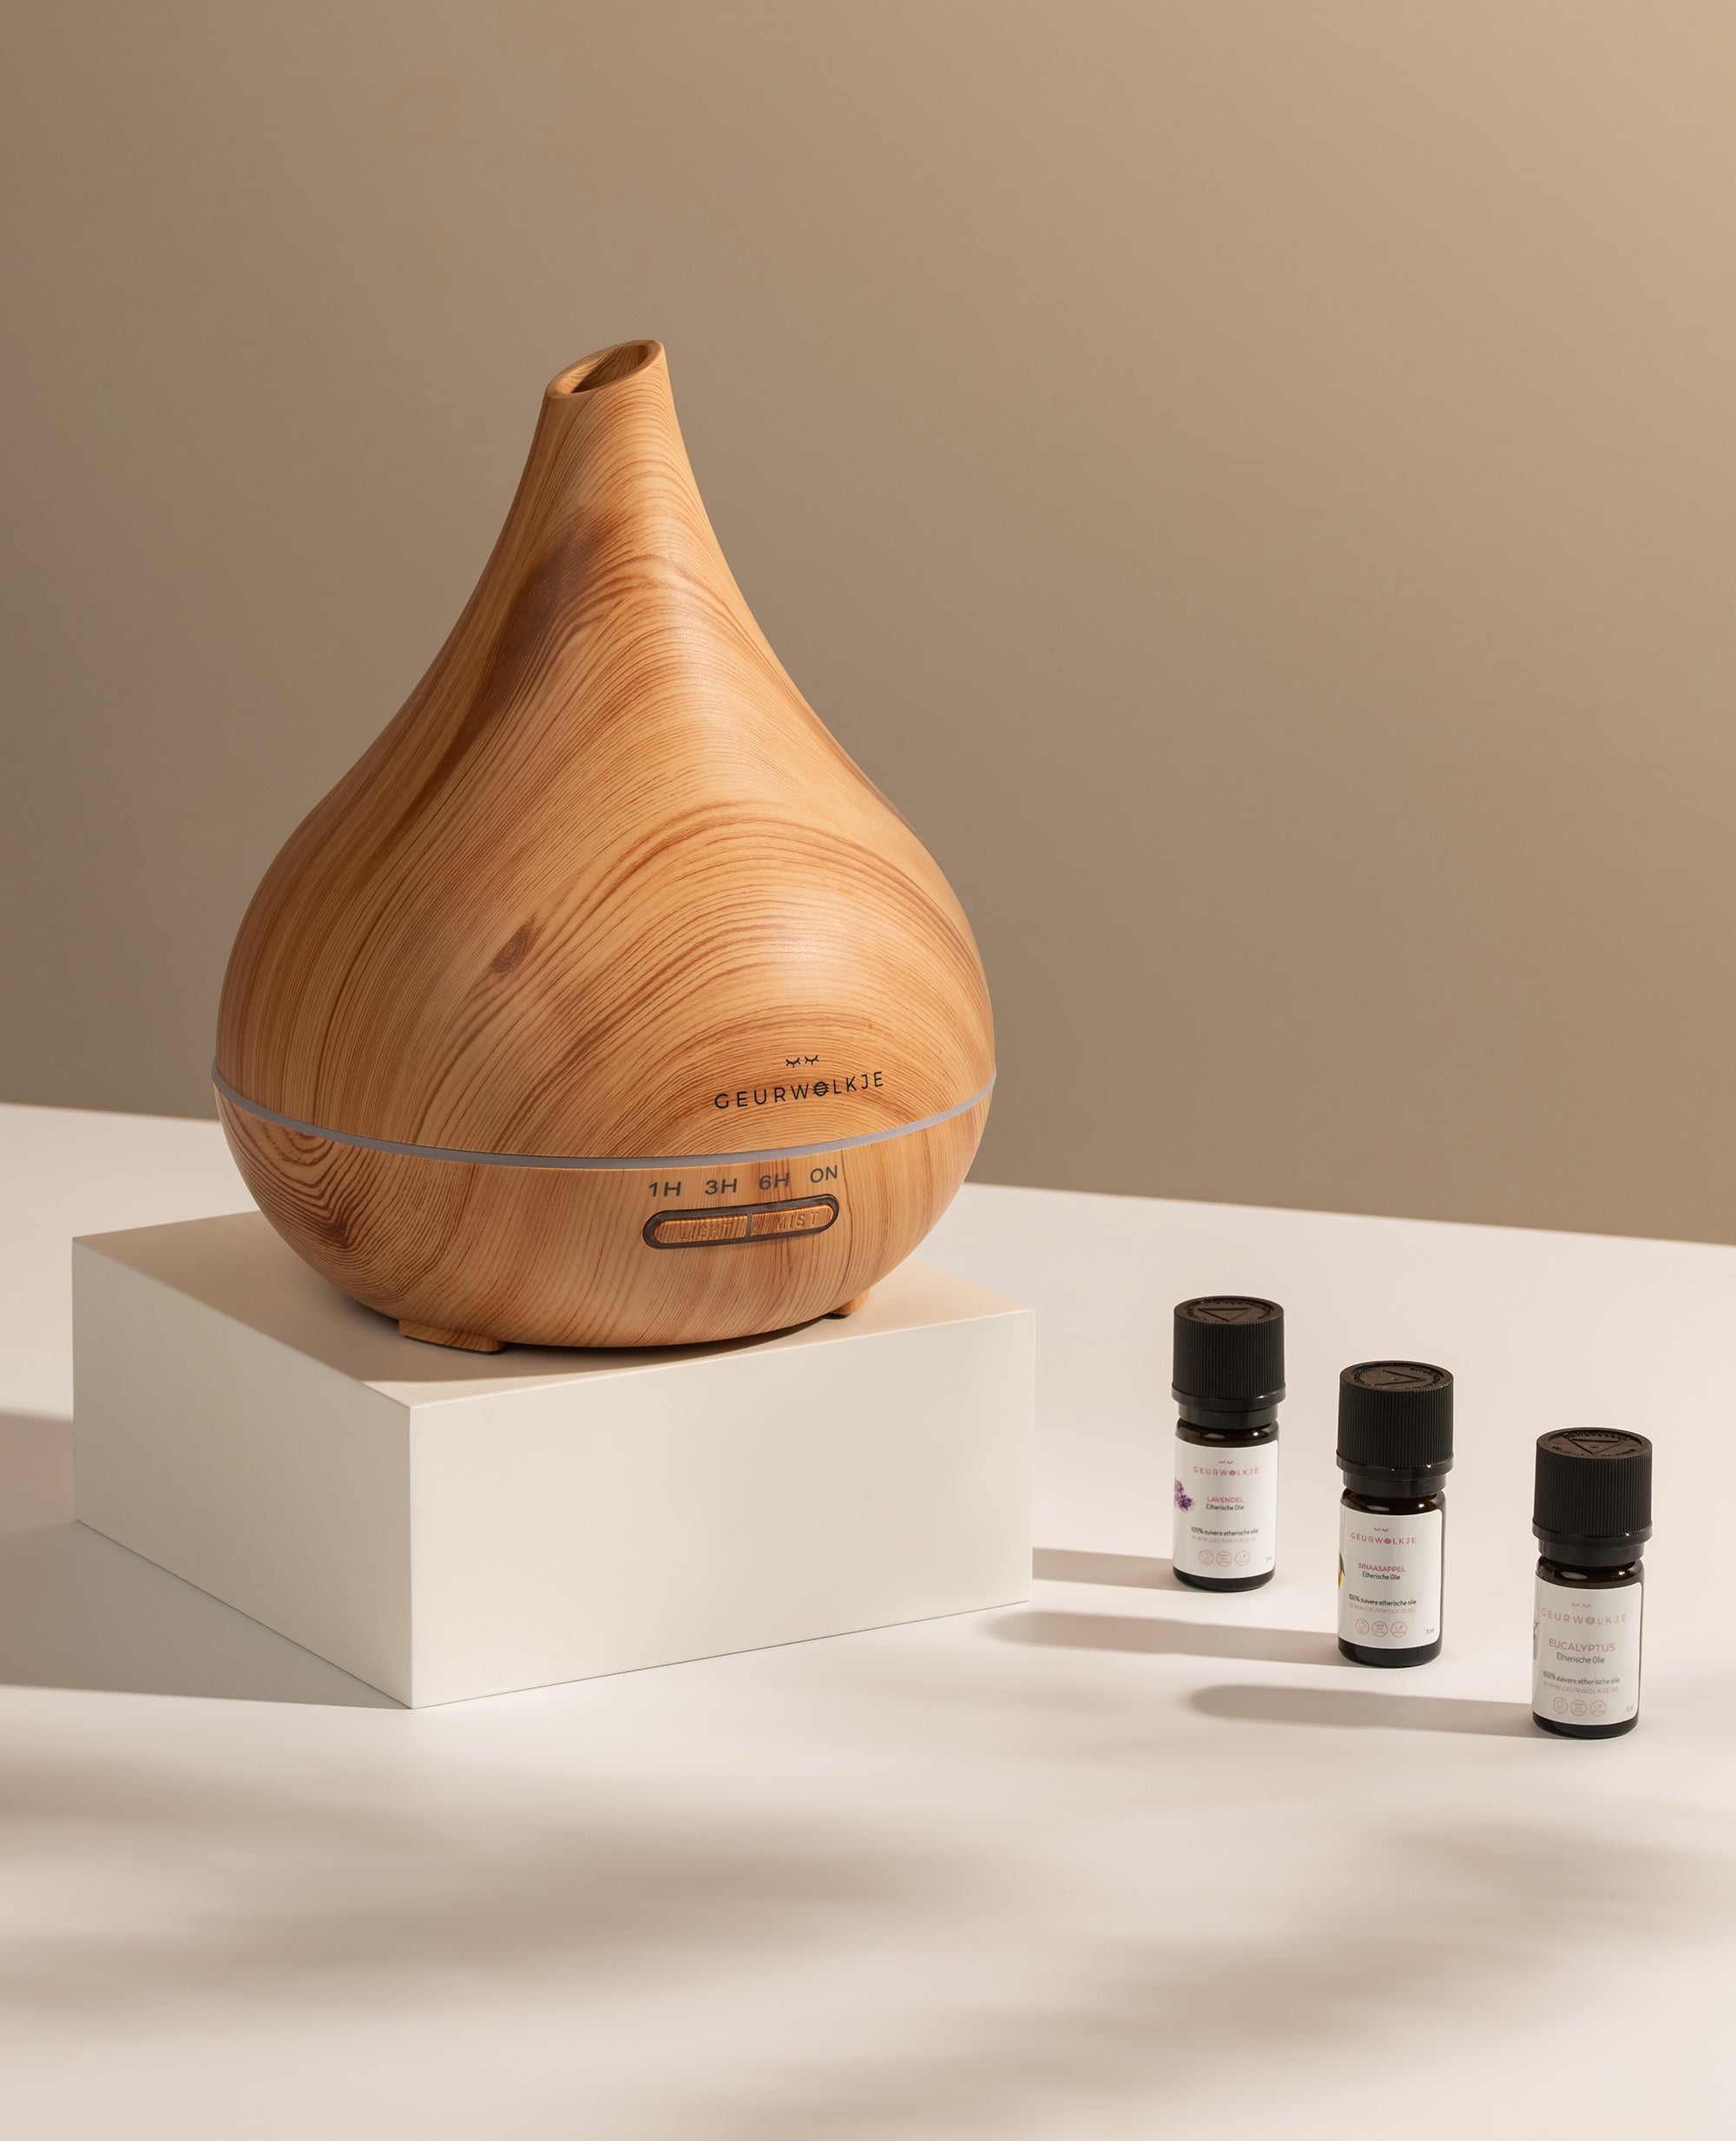 Geschenkdoos ®Geurwolkje -Relax & Easy Licht hout  - Nimbus aroma diffuser, 3x etherische olie, thee